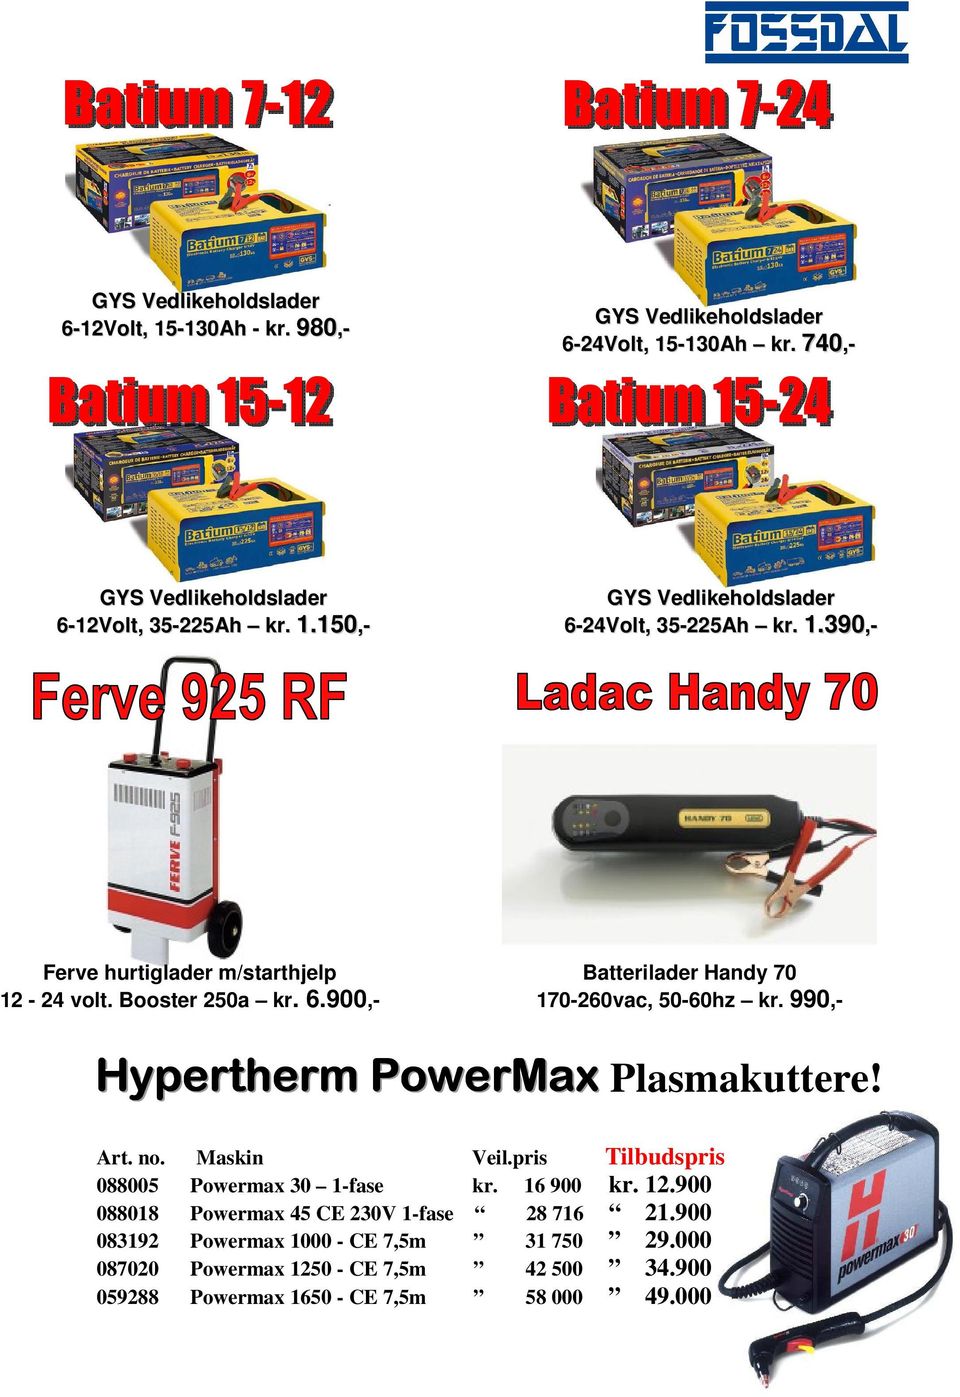 990,- Hypertherm PowerMax Plasmakuttere! Art. no. Maskin Veil.pris Tilbudspris 088005 Powermax 30 1-fase kr. 16 900 kr. 12.